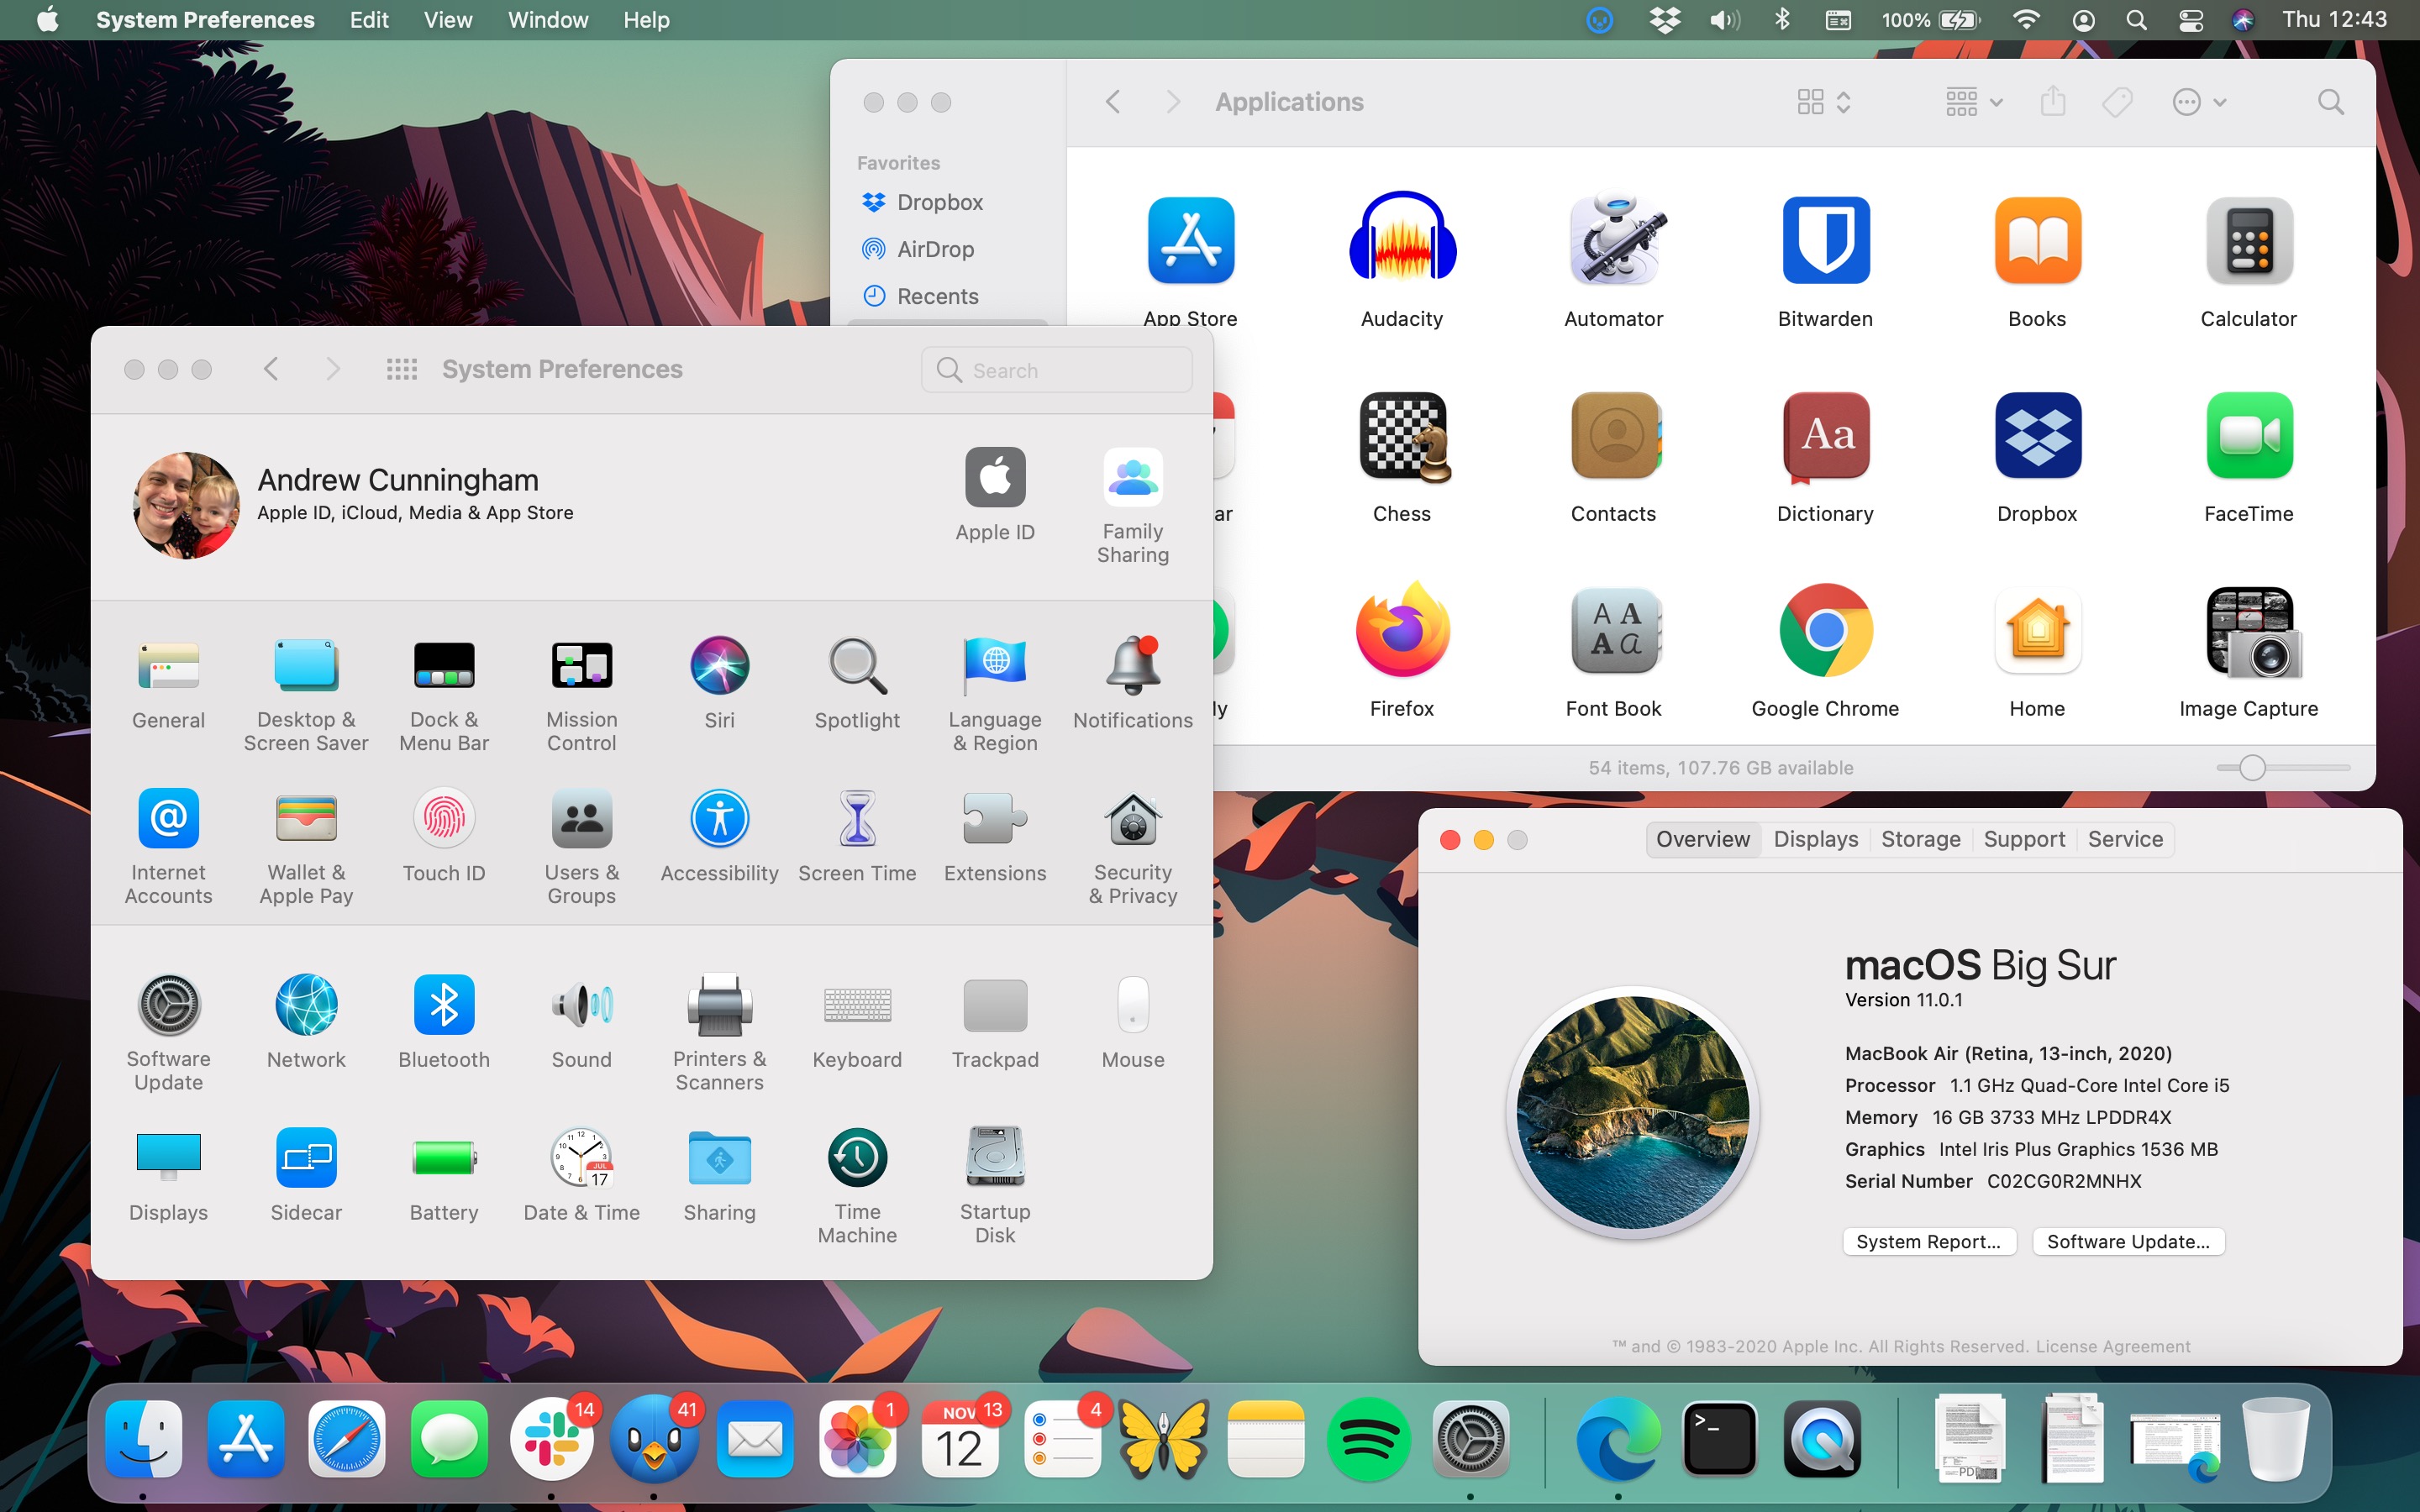 Big Sur brings a brand new look to macOS.